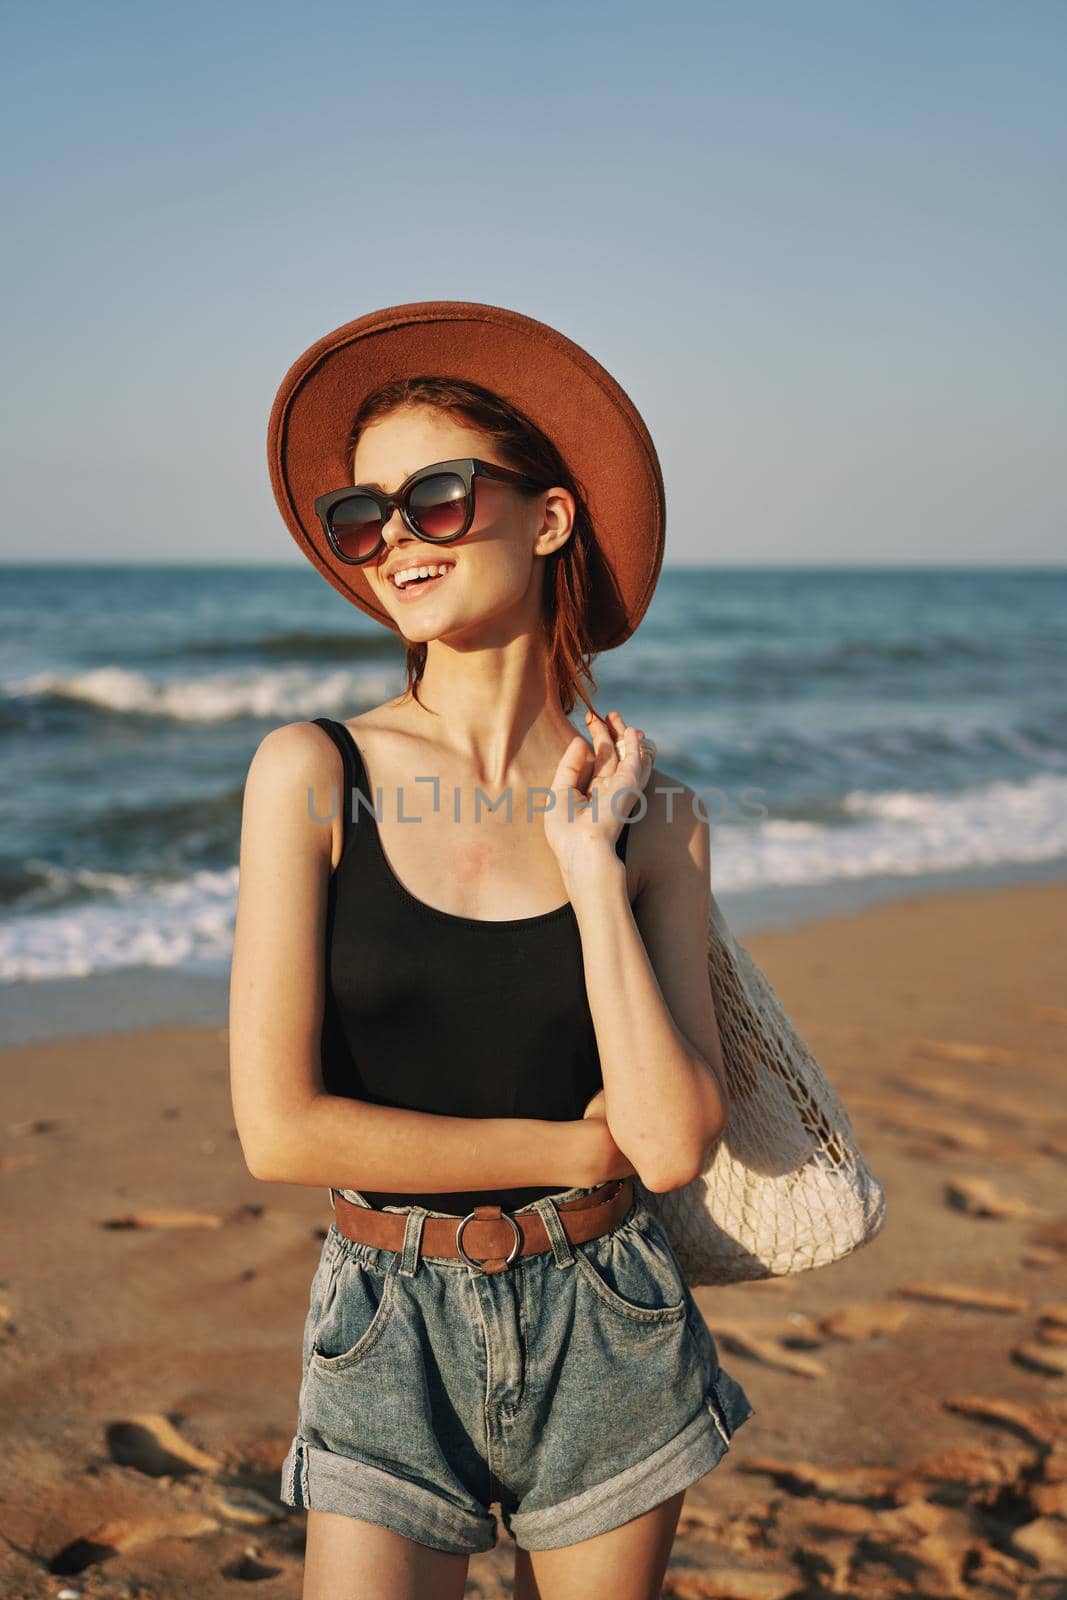 woman walking on the beach landscape sun fun lifestyle. High quality photo